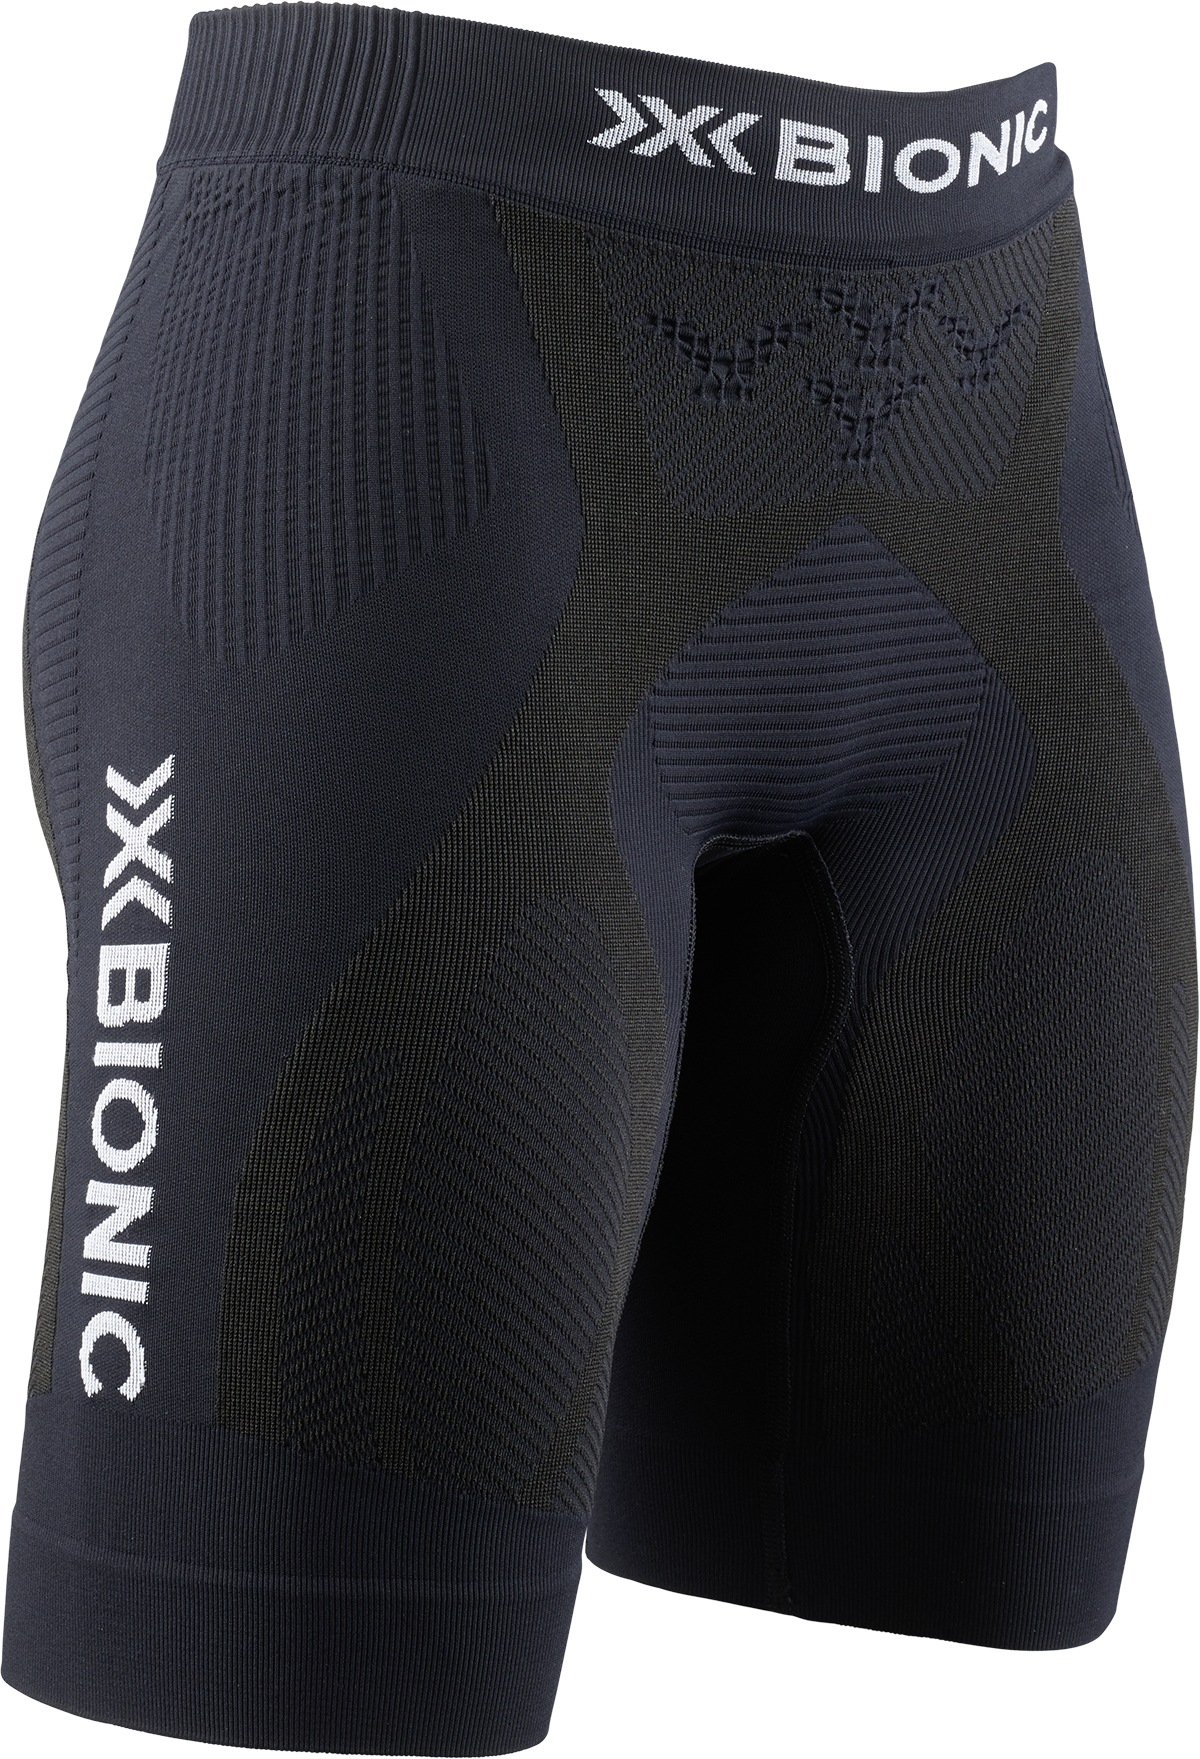 X-BIONIC® THE TRICK 4.0 RUNNING SHORTS WMN